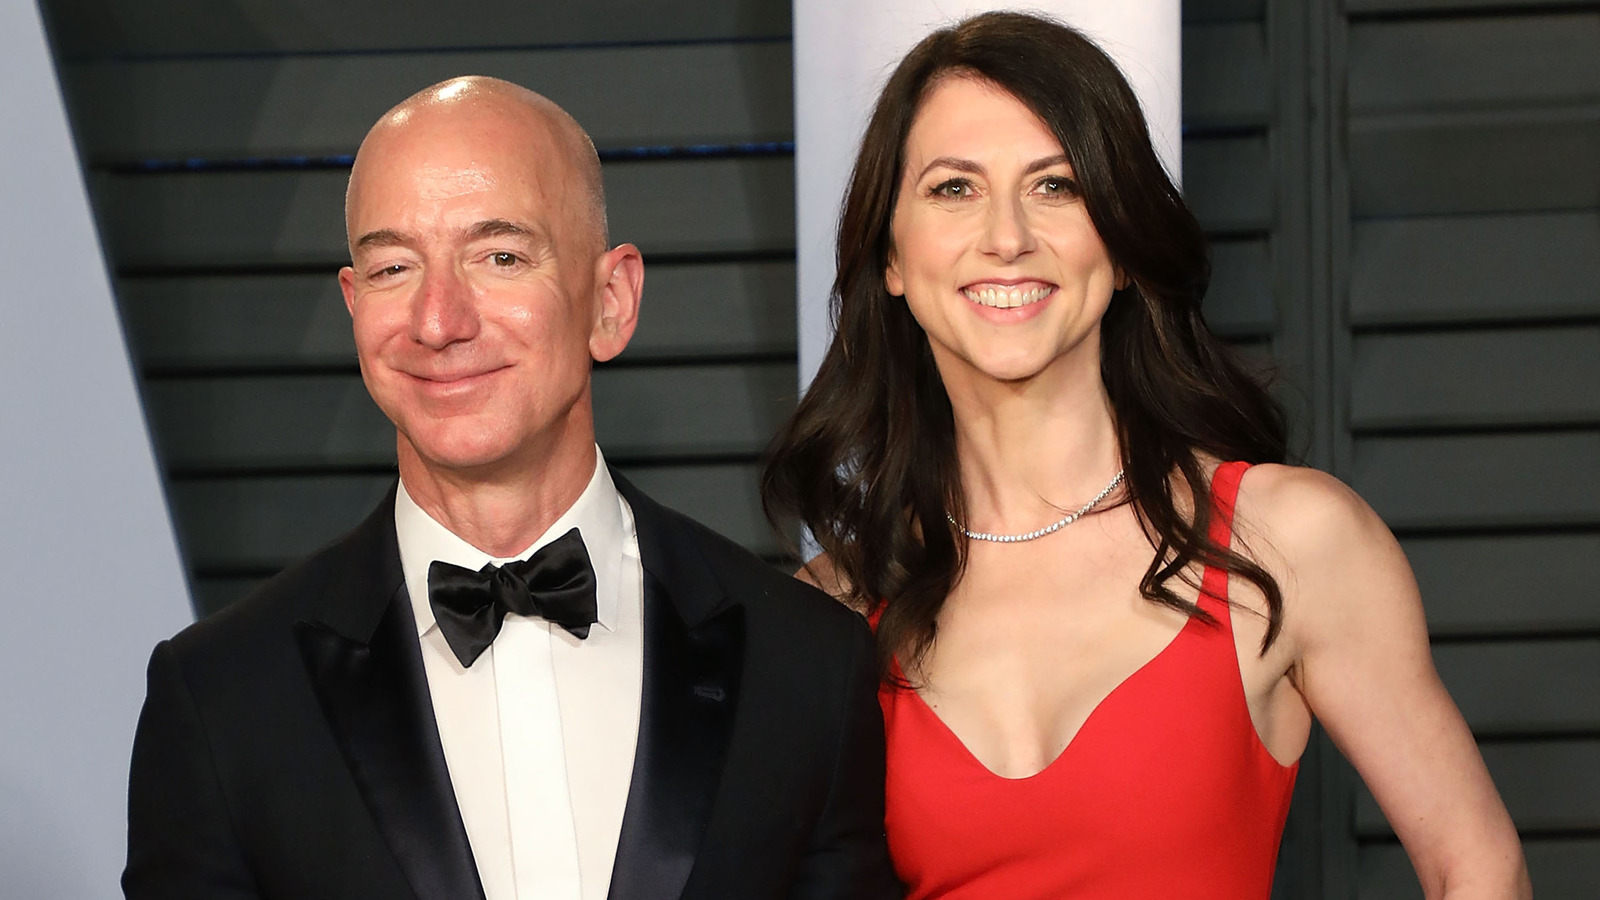 How Much Money Did Jeff Bezos' Ex Wife Get In Their Divorce?